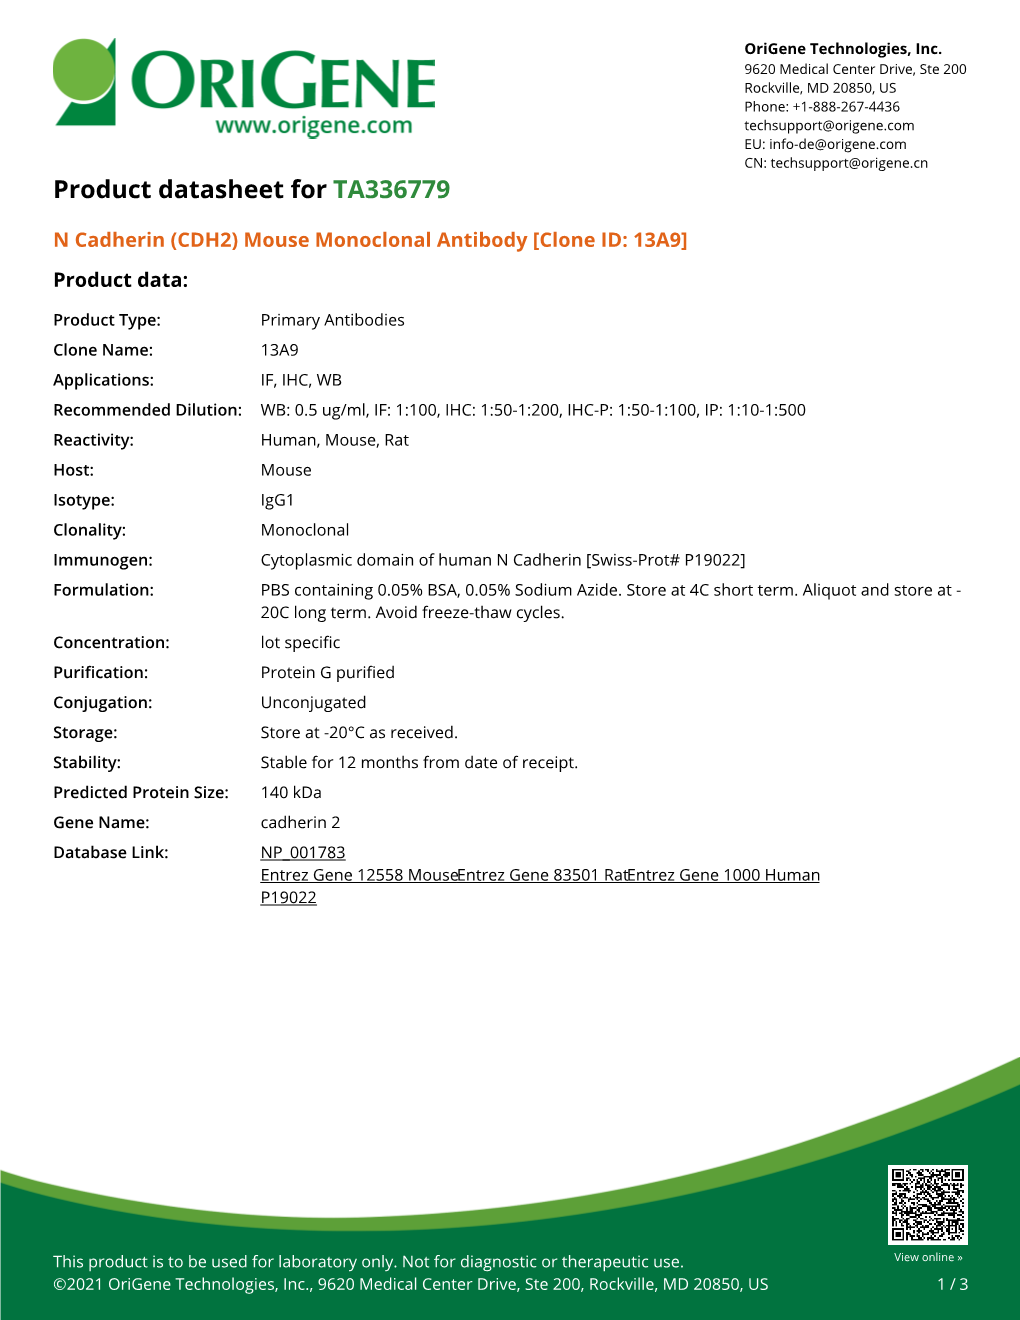 N Cadherin (CDH2) Mouse Monoclonal Antibody [Clone ID: 13A9] Product Data